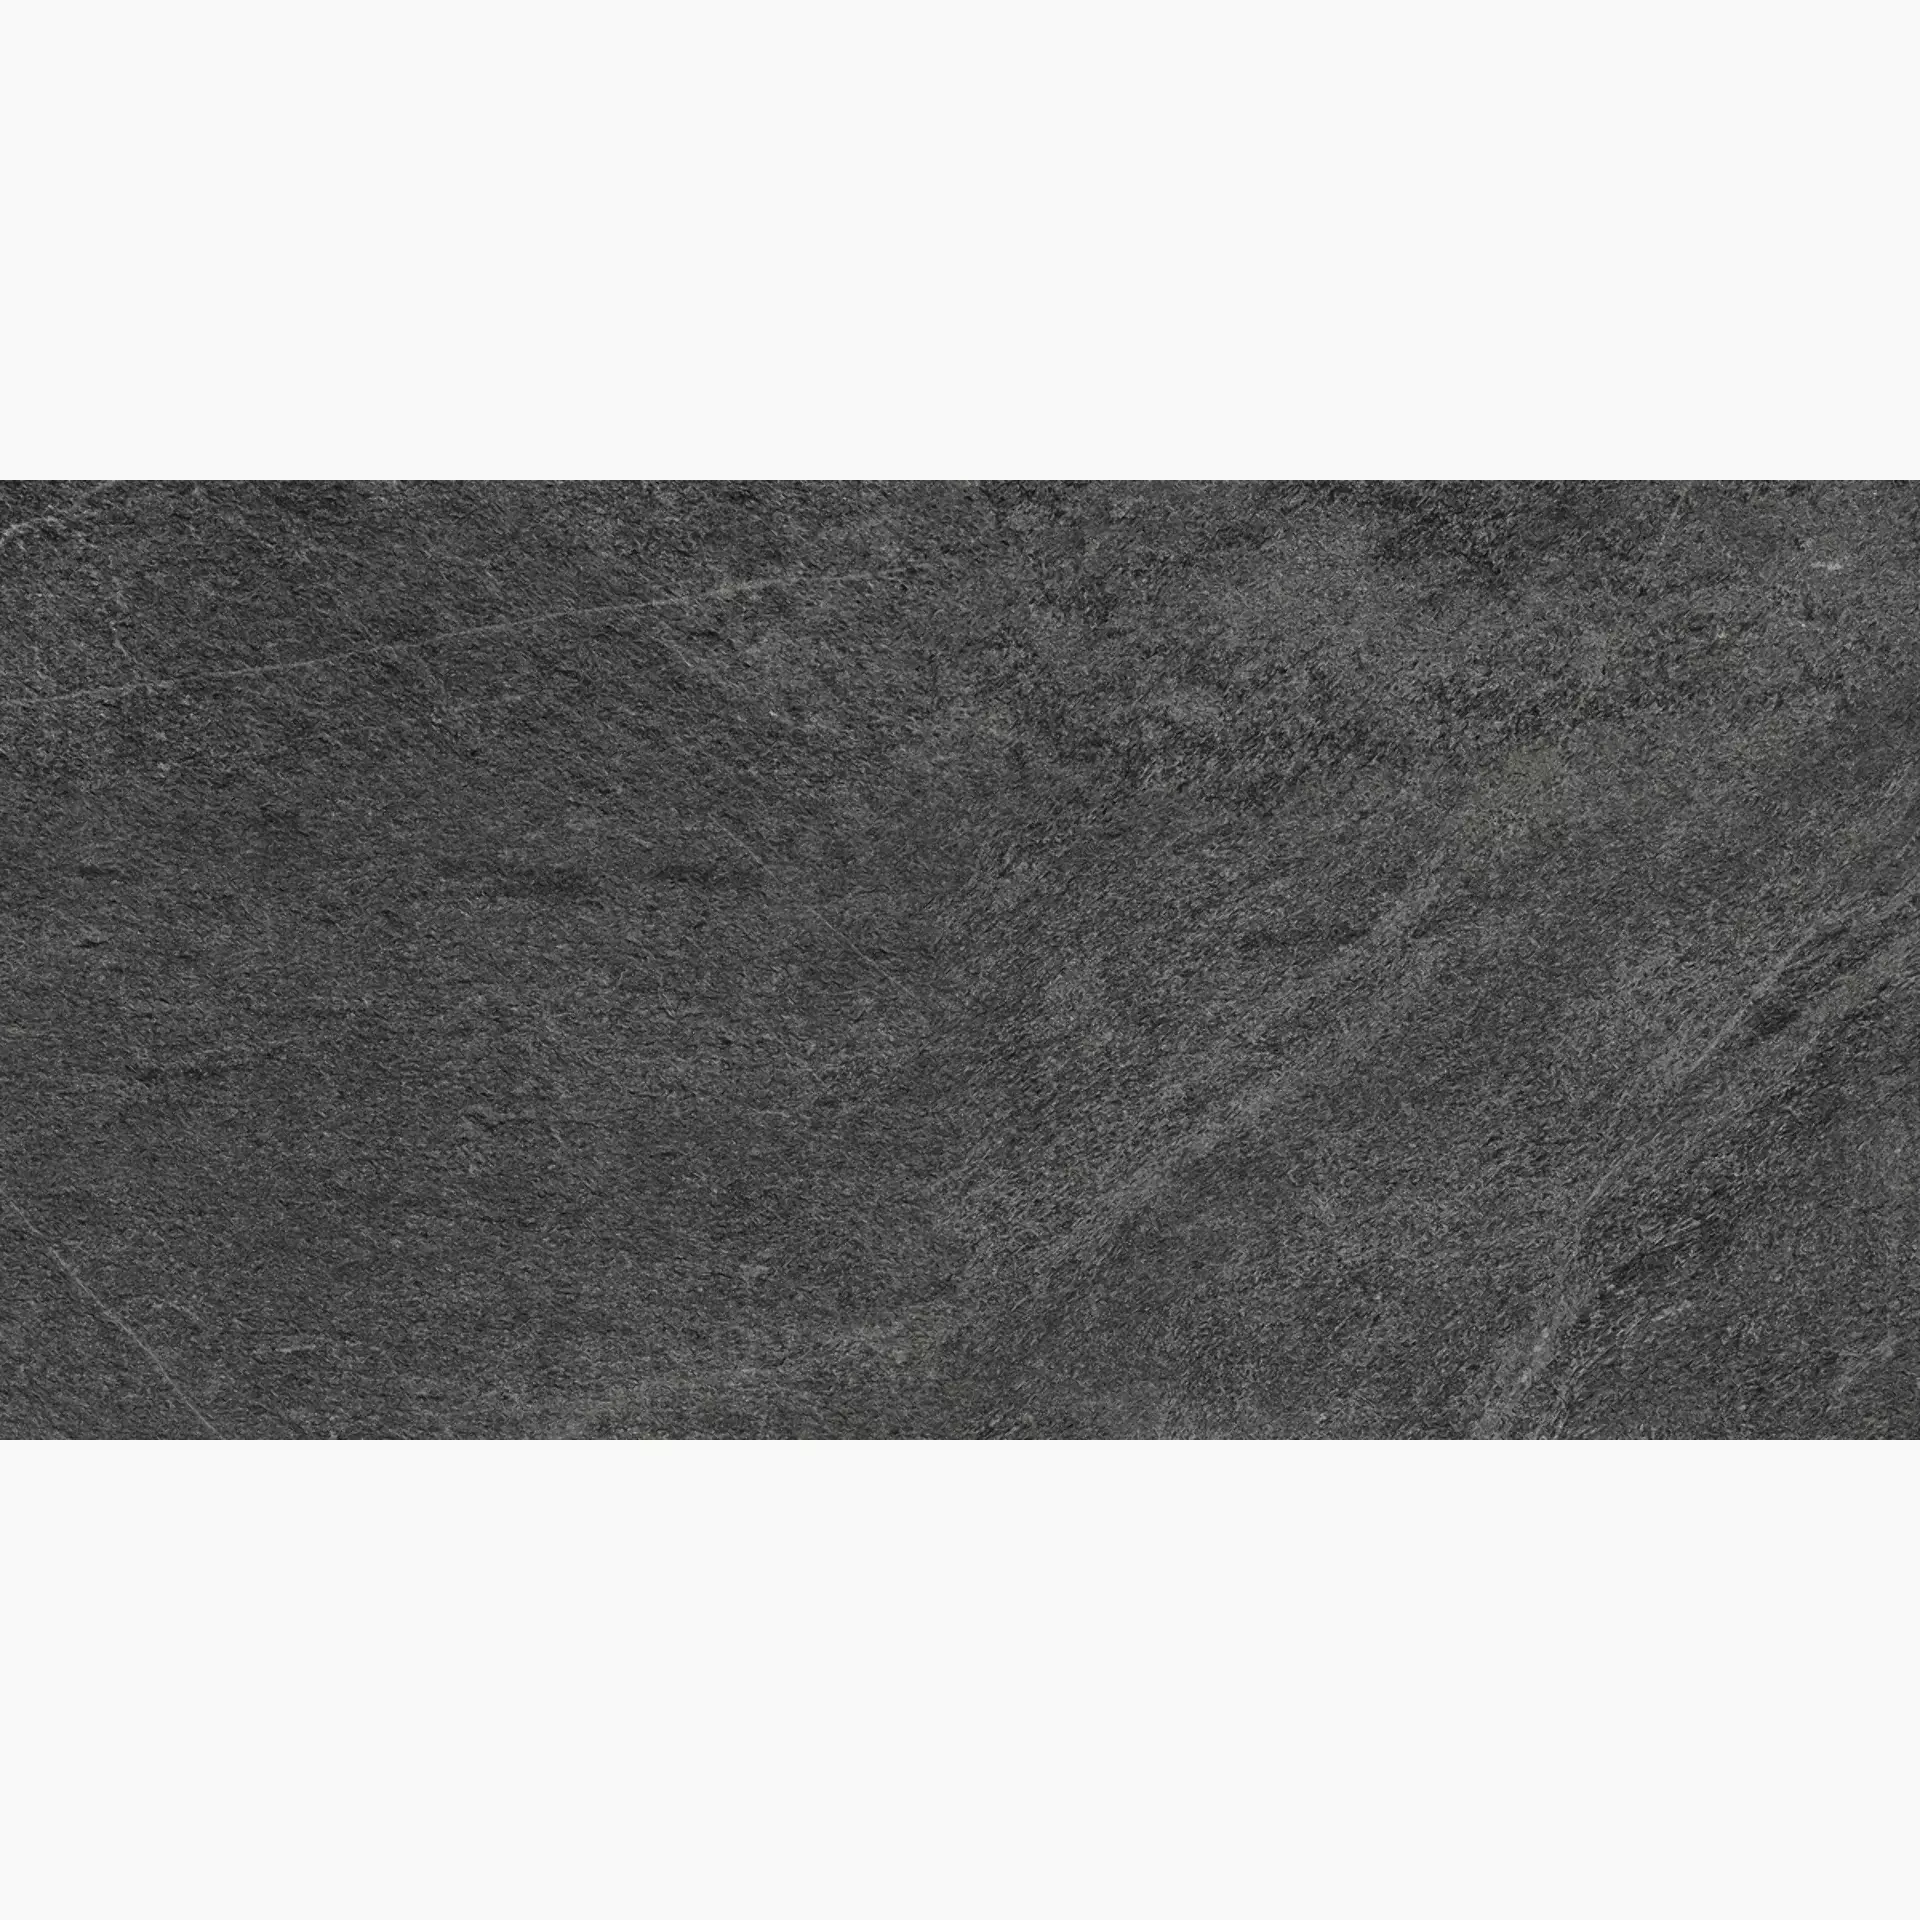 Marazzi Mystone Quarzite Black Naturale – Matt MZST 60x120cm rectified 10mm